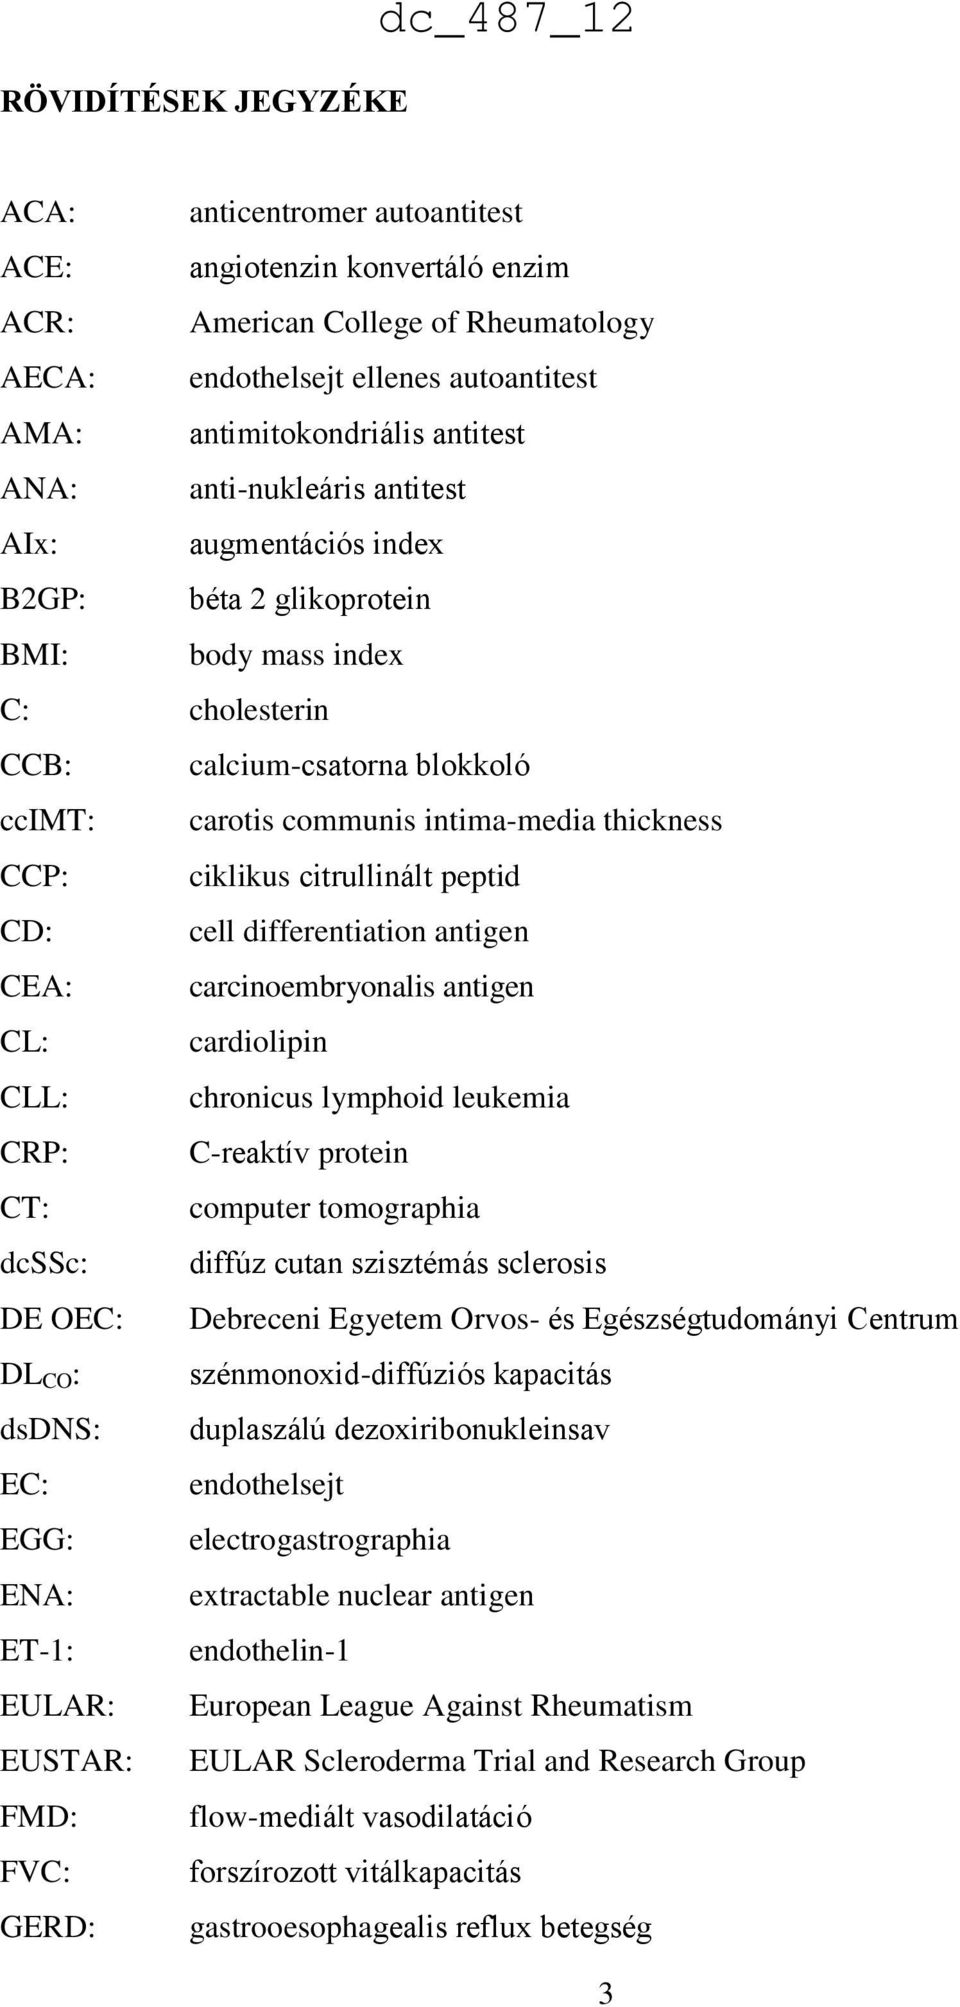 thickness CCP: ciklikus citrullinált peptid CD: cell differentiation antigen CEA: carcinoembryonalis antigen CL: cardiolipin CLL: chronicus lymphoid leukemia CRP: C-reaktív protein CT: computer